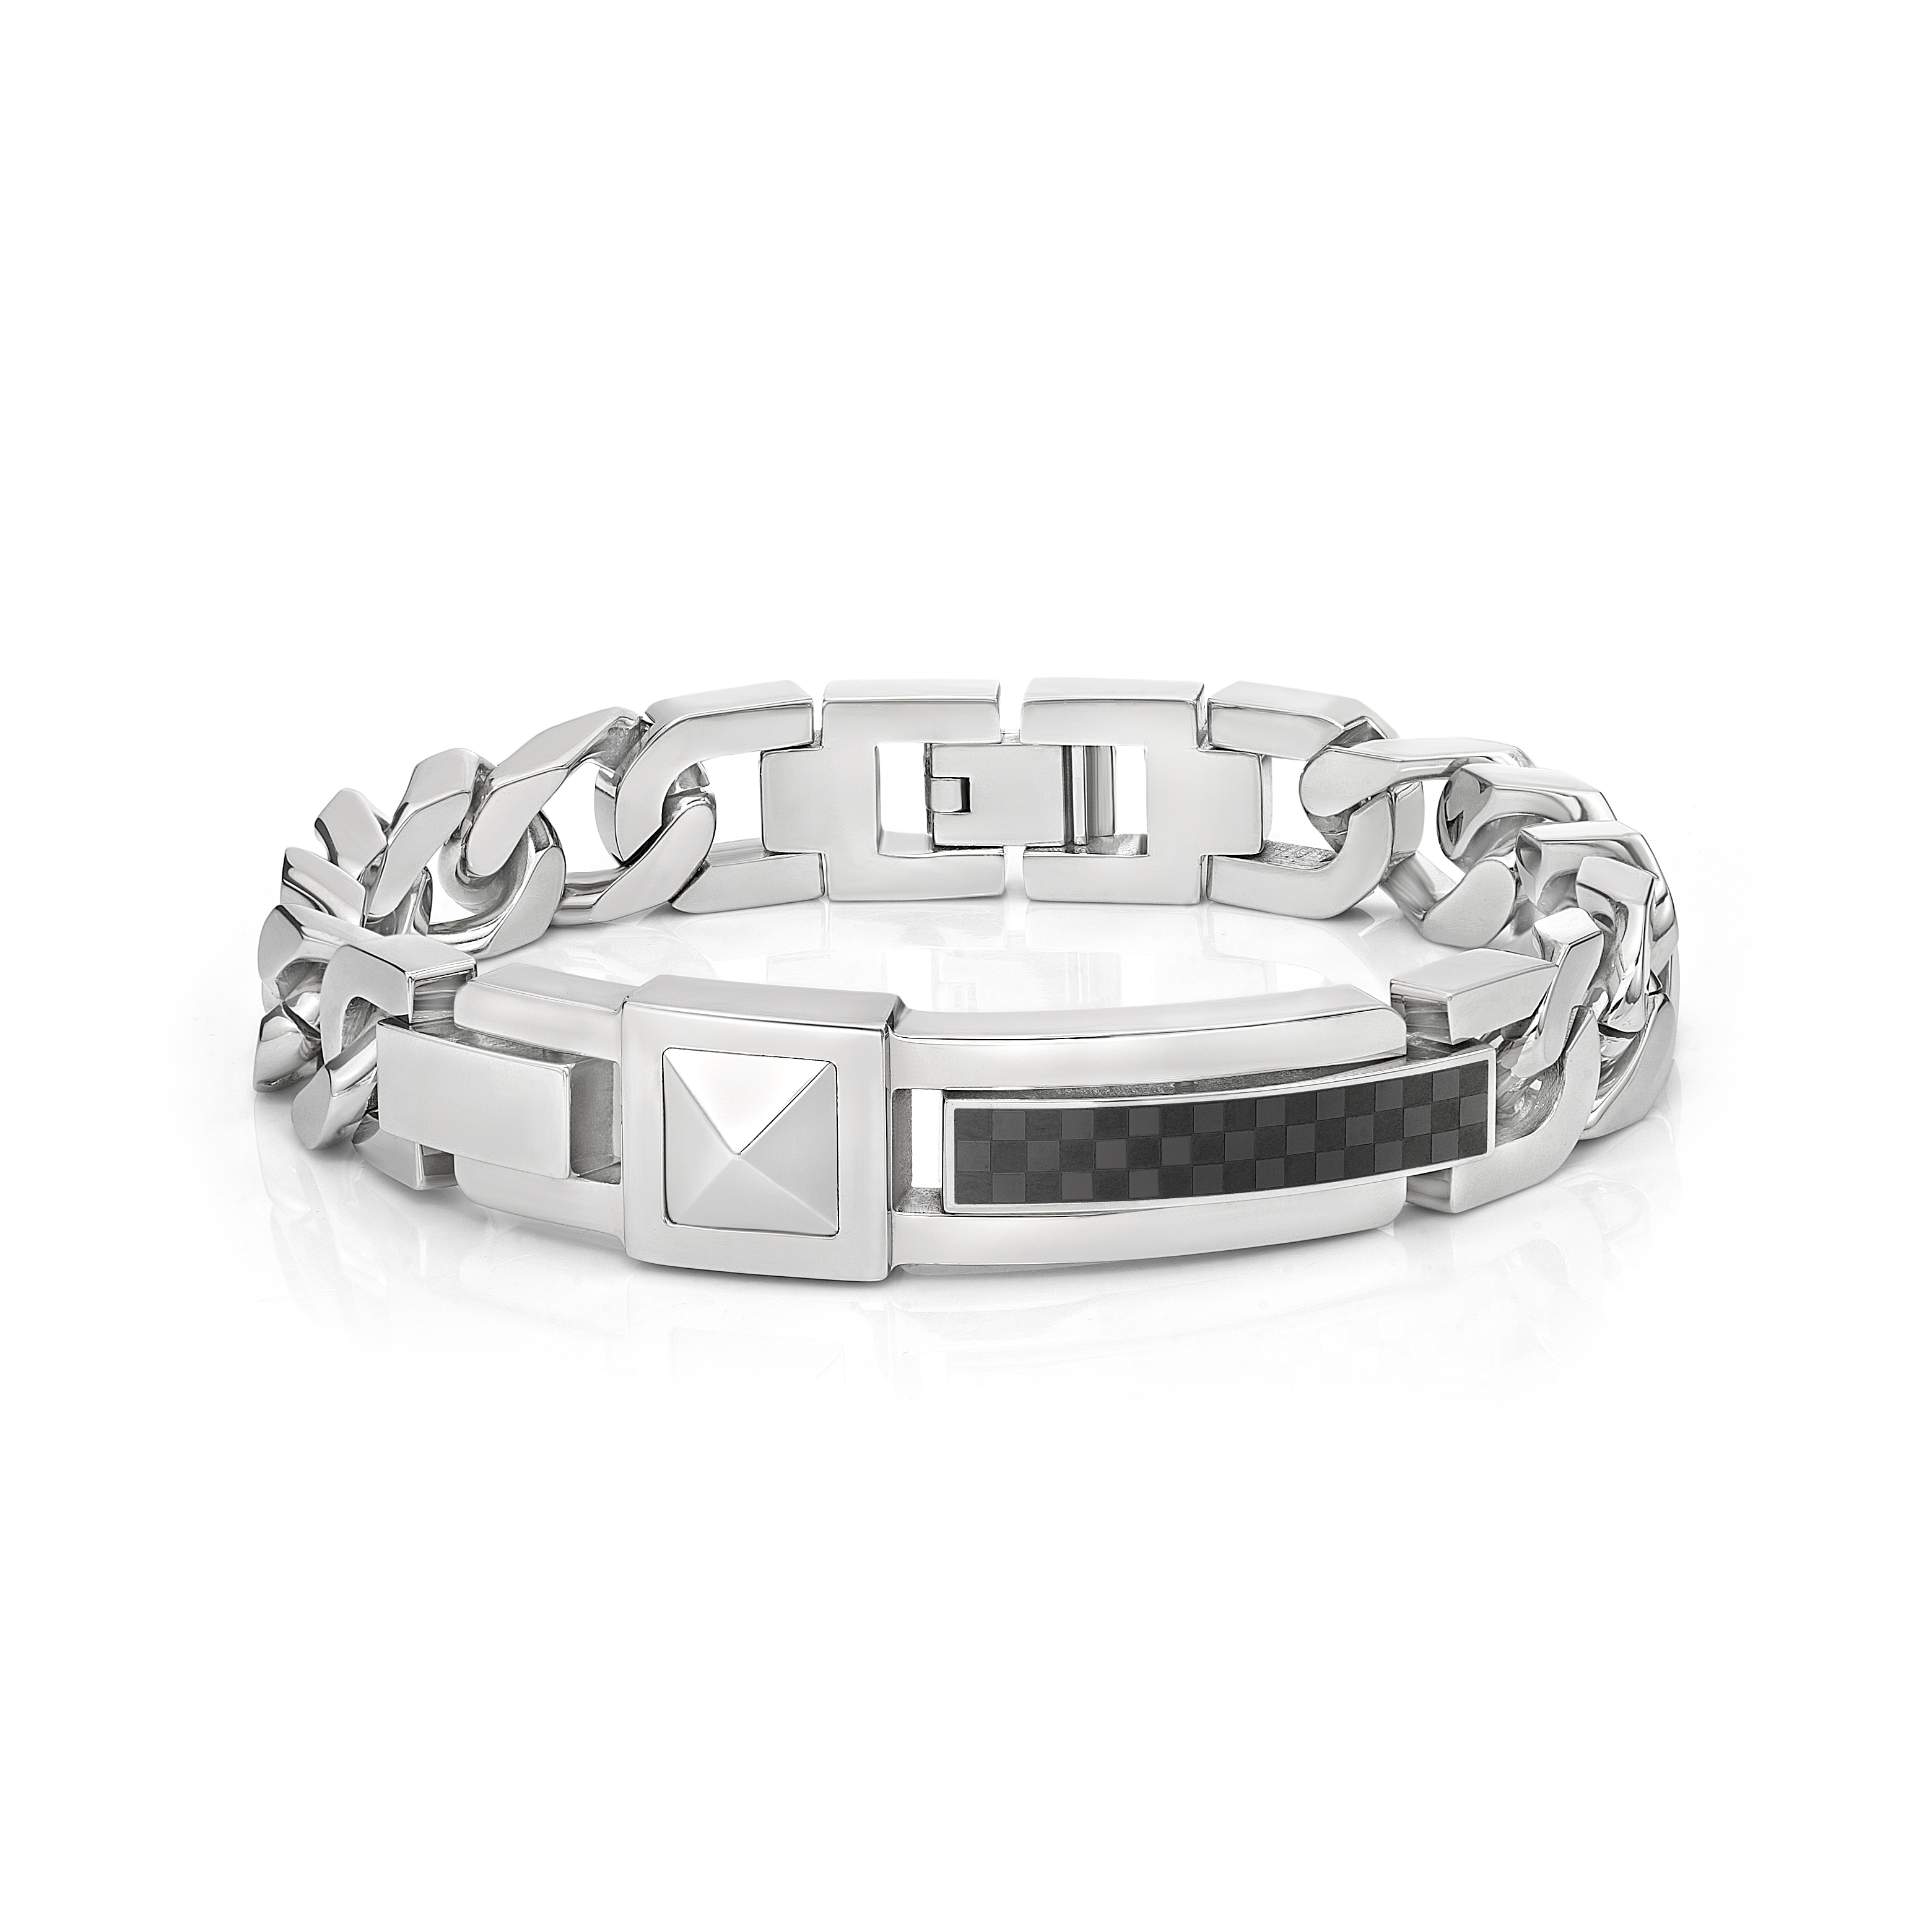 Steel Rivet Bracelet with Black square pattern